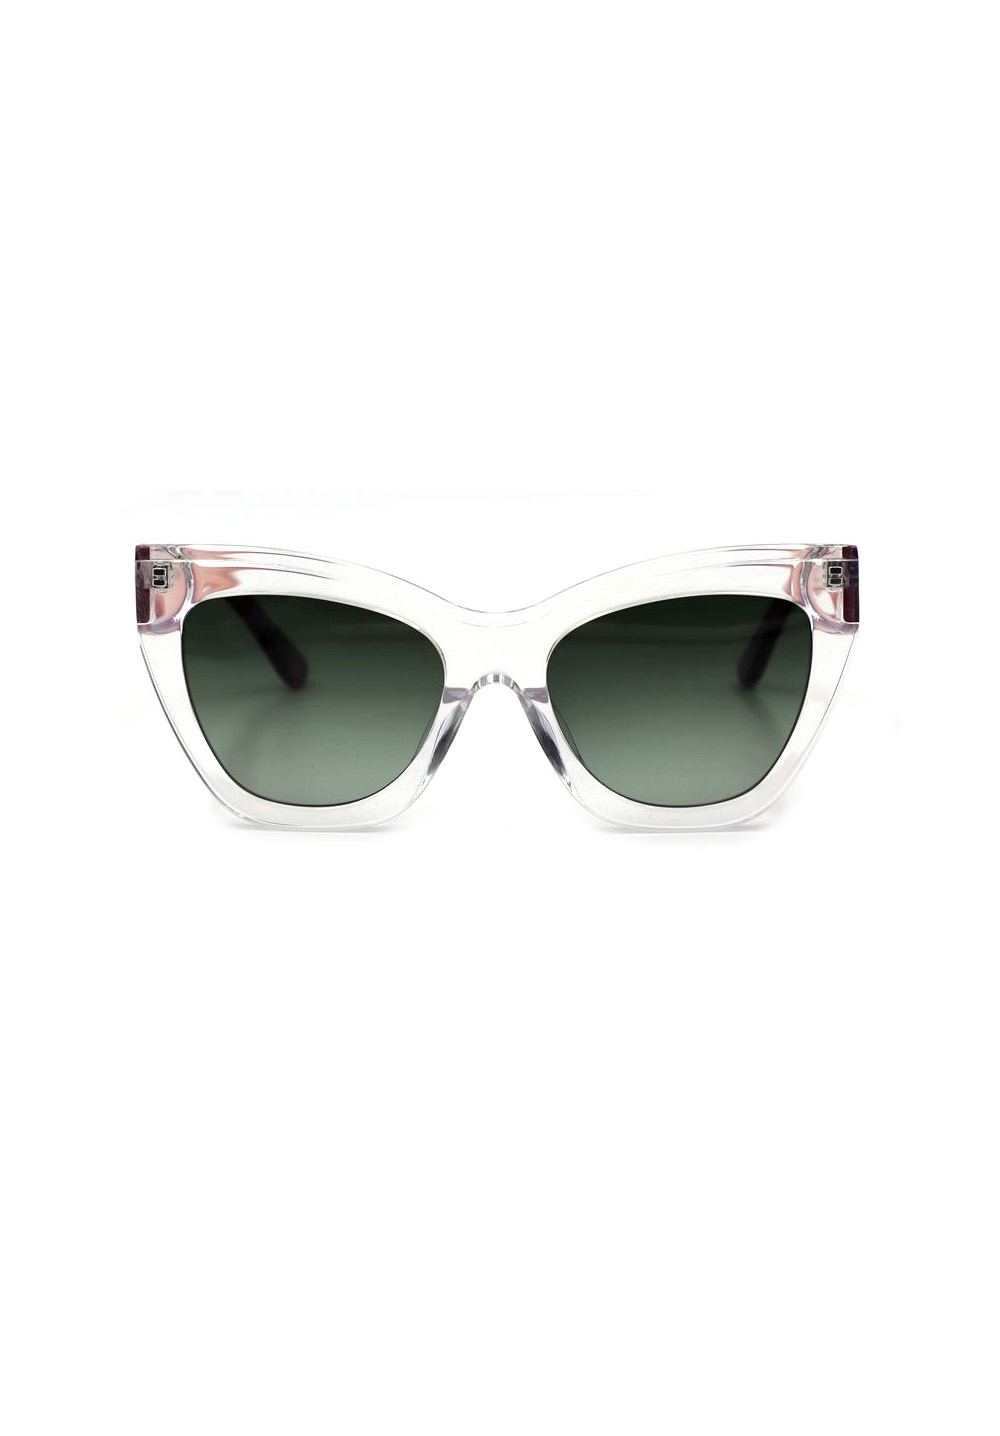 Female fashion sunglasses in colors acetate Featured Image